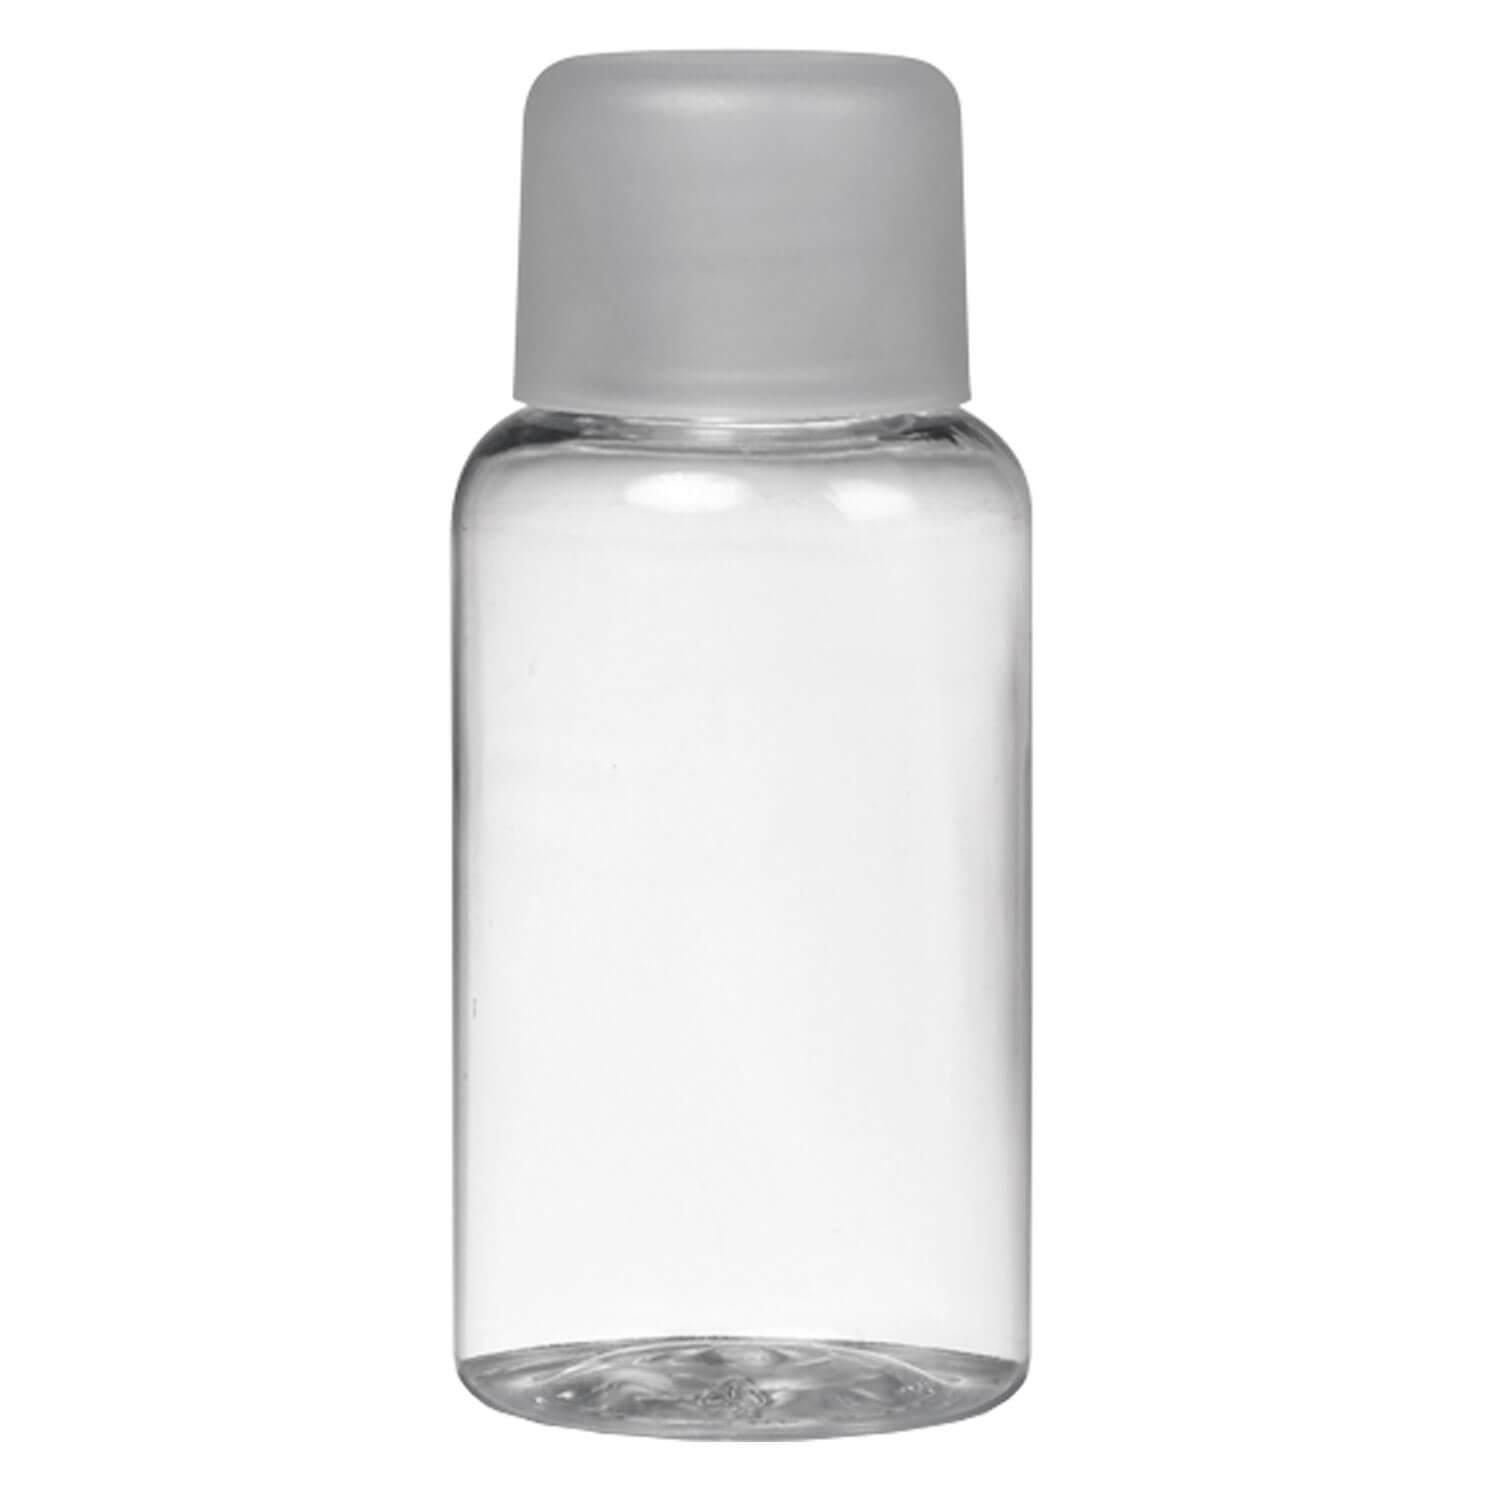 TRISA Travel - Lotion Bottle Medium